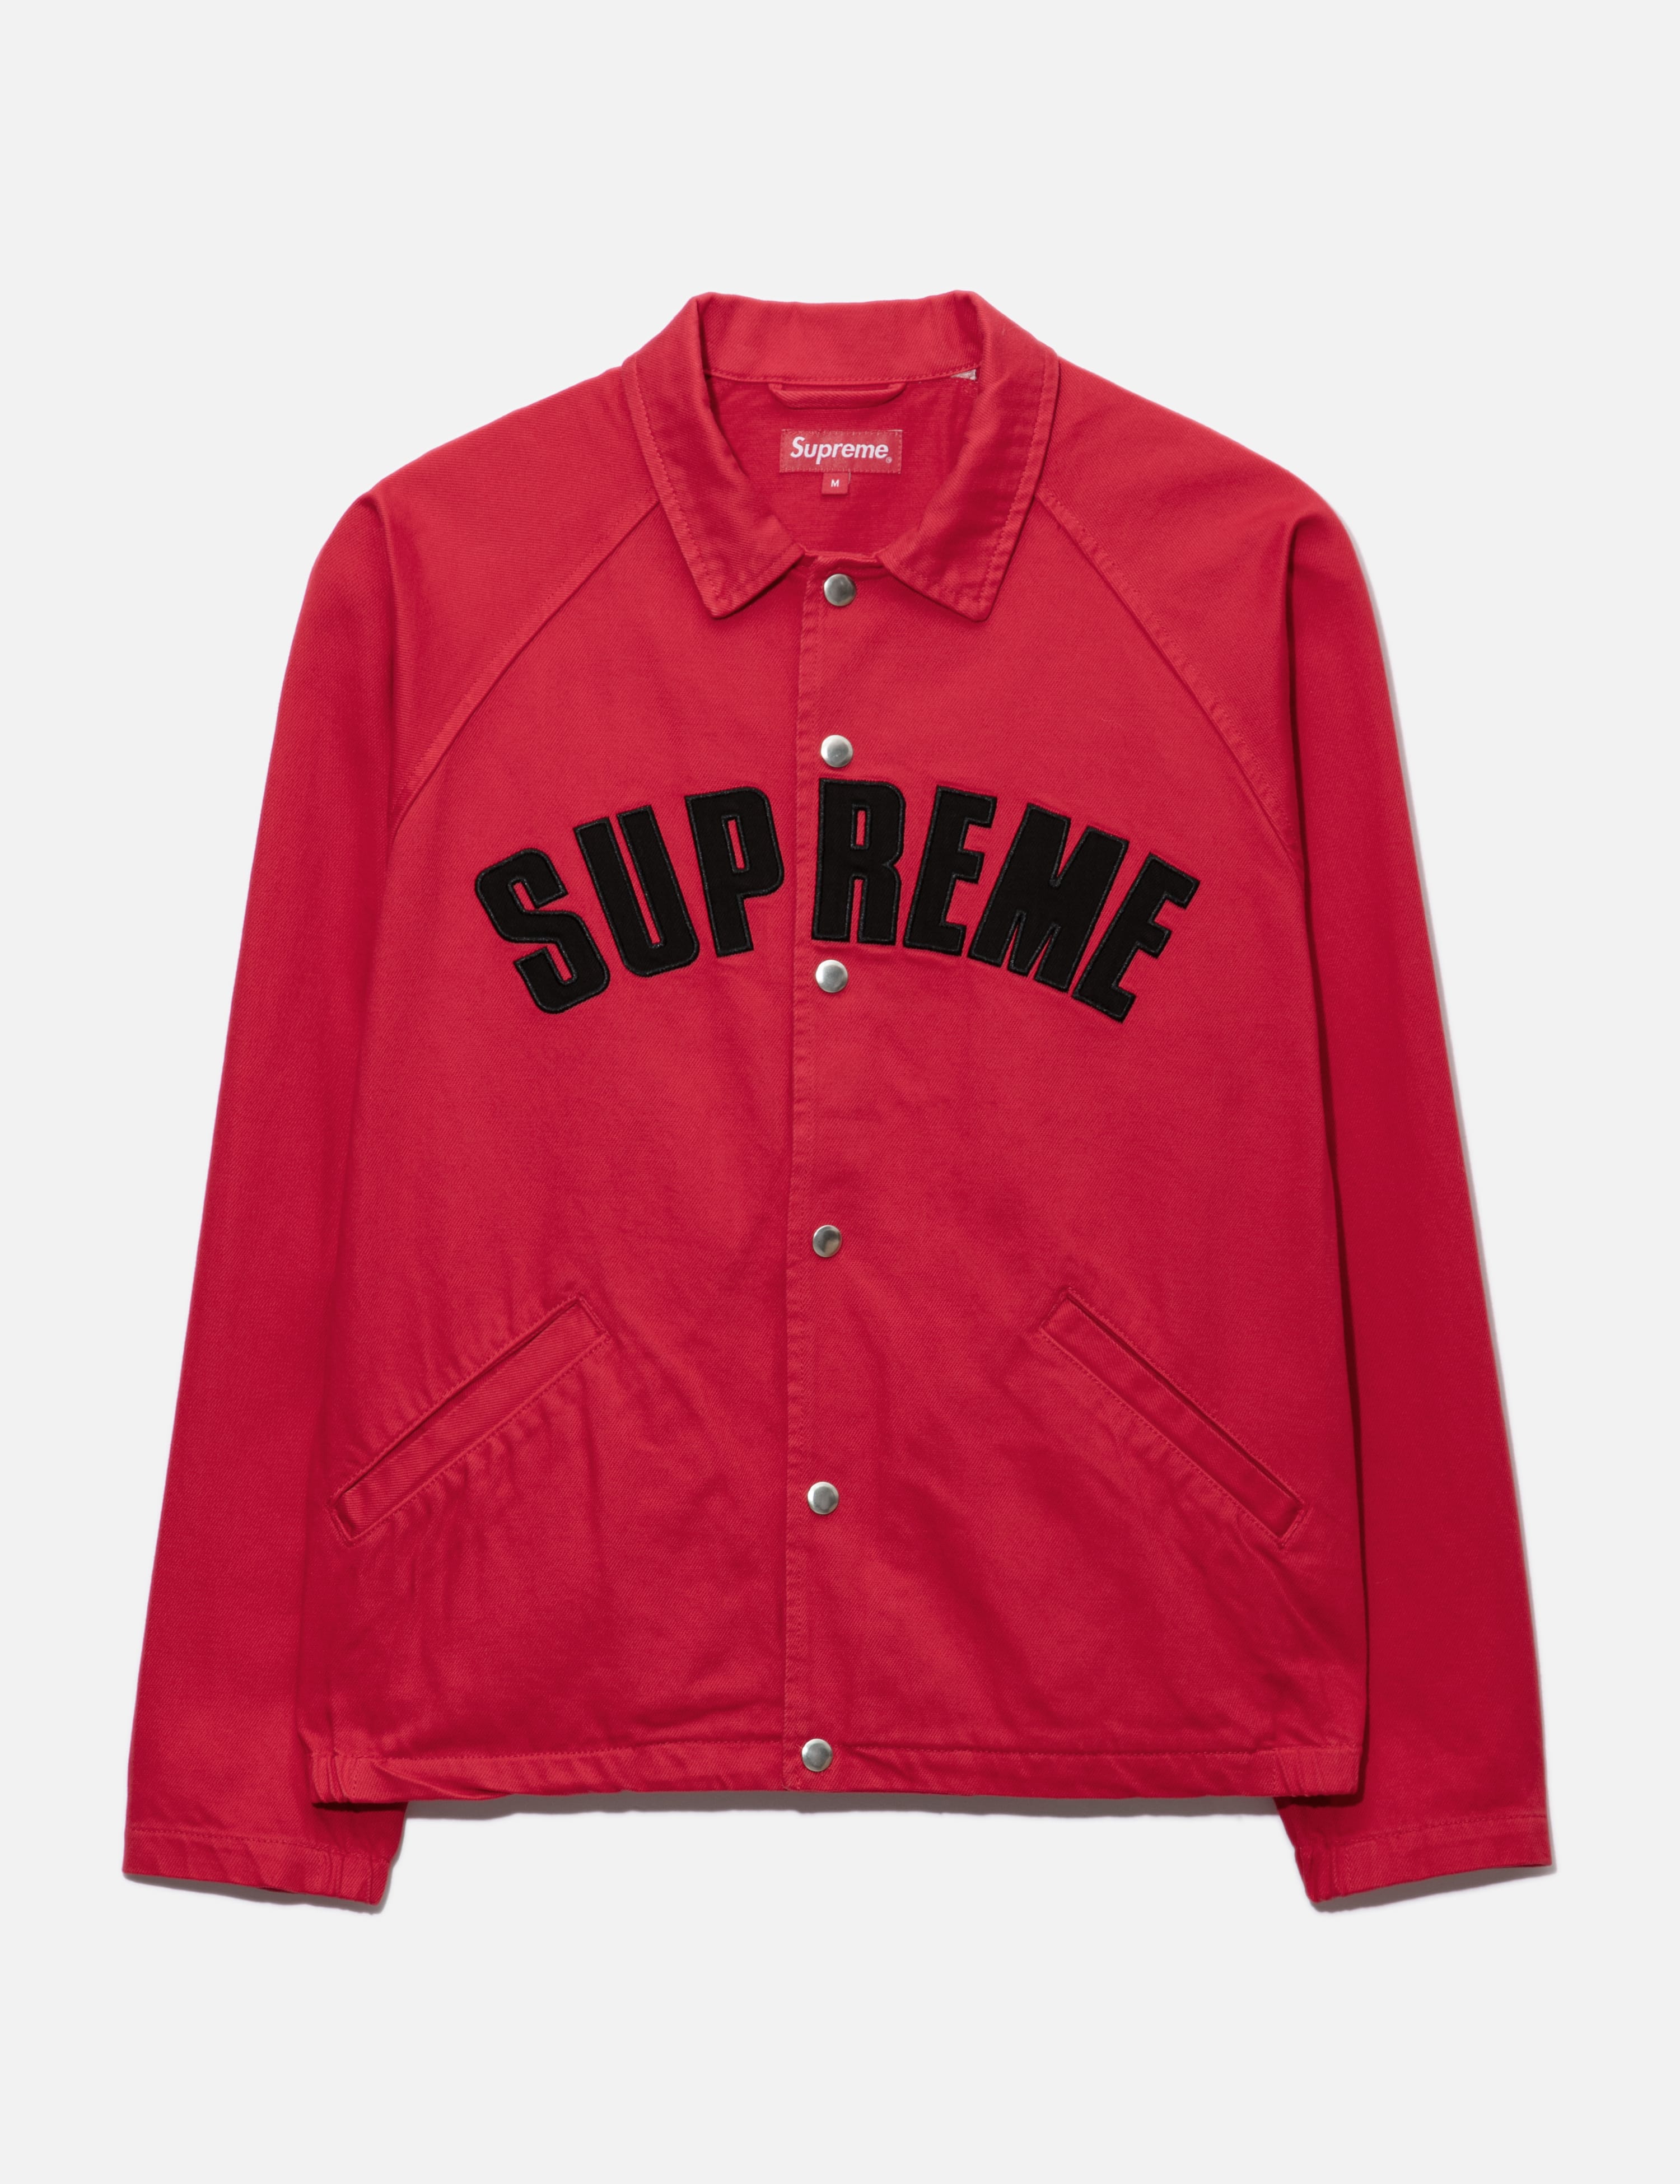 Supreme - Supreme x Champion Hooded Jacket | HBX - Globally